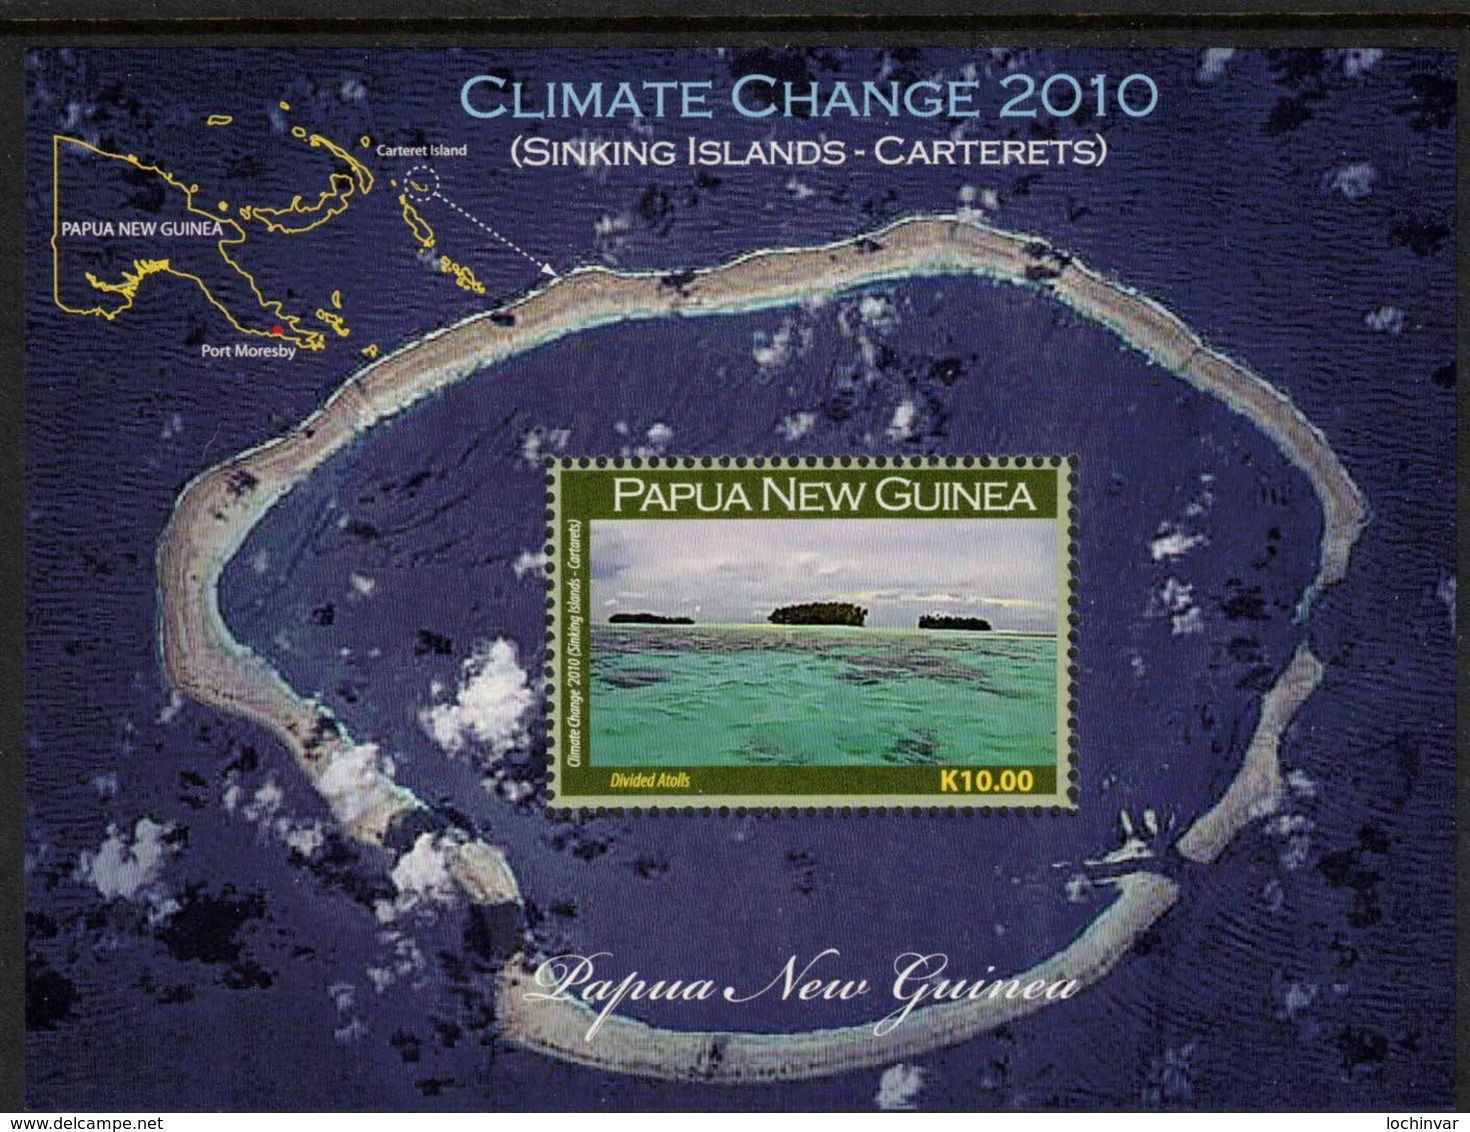 PAPUA NEW GUINEA, 2010 CLIMATE CHANGE EFFECTS K10 MINISHEET MNH - Papua New Guinea